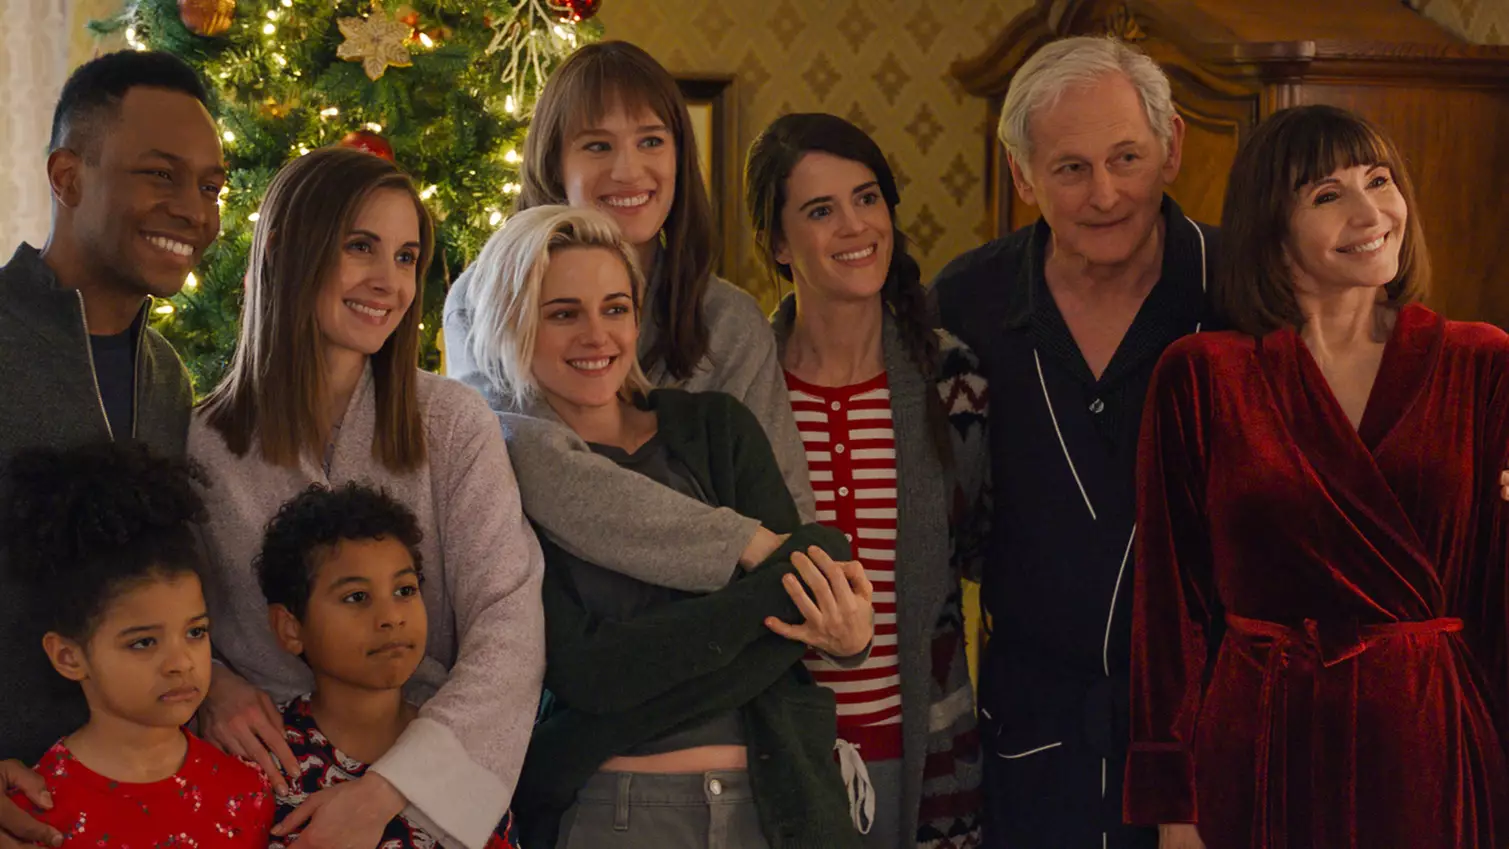 'Happiest Season' premieres on Hulu on 25th November (